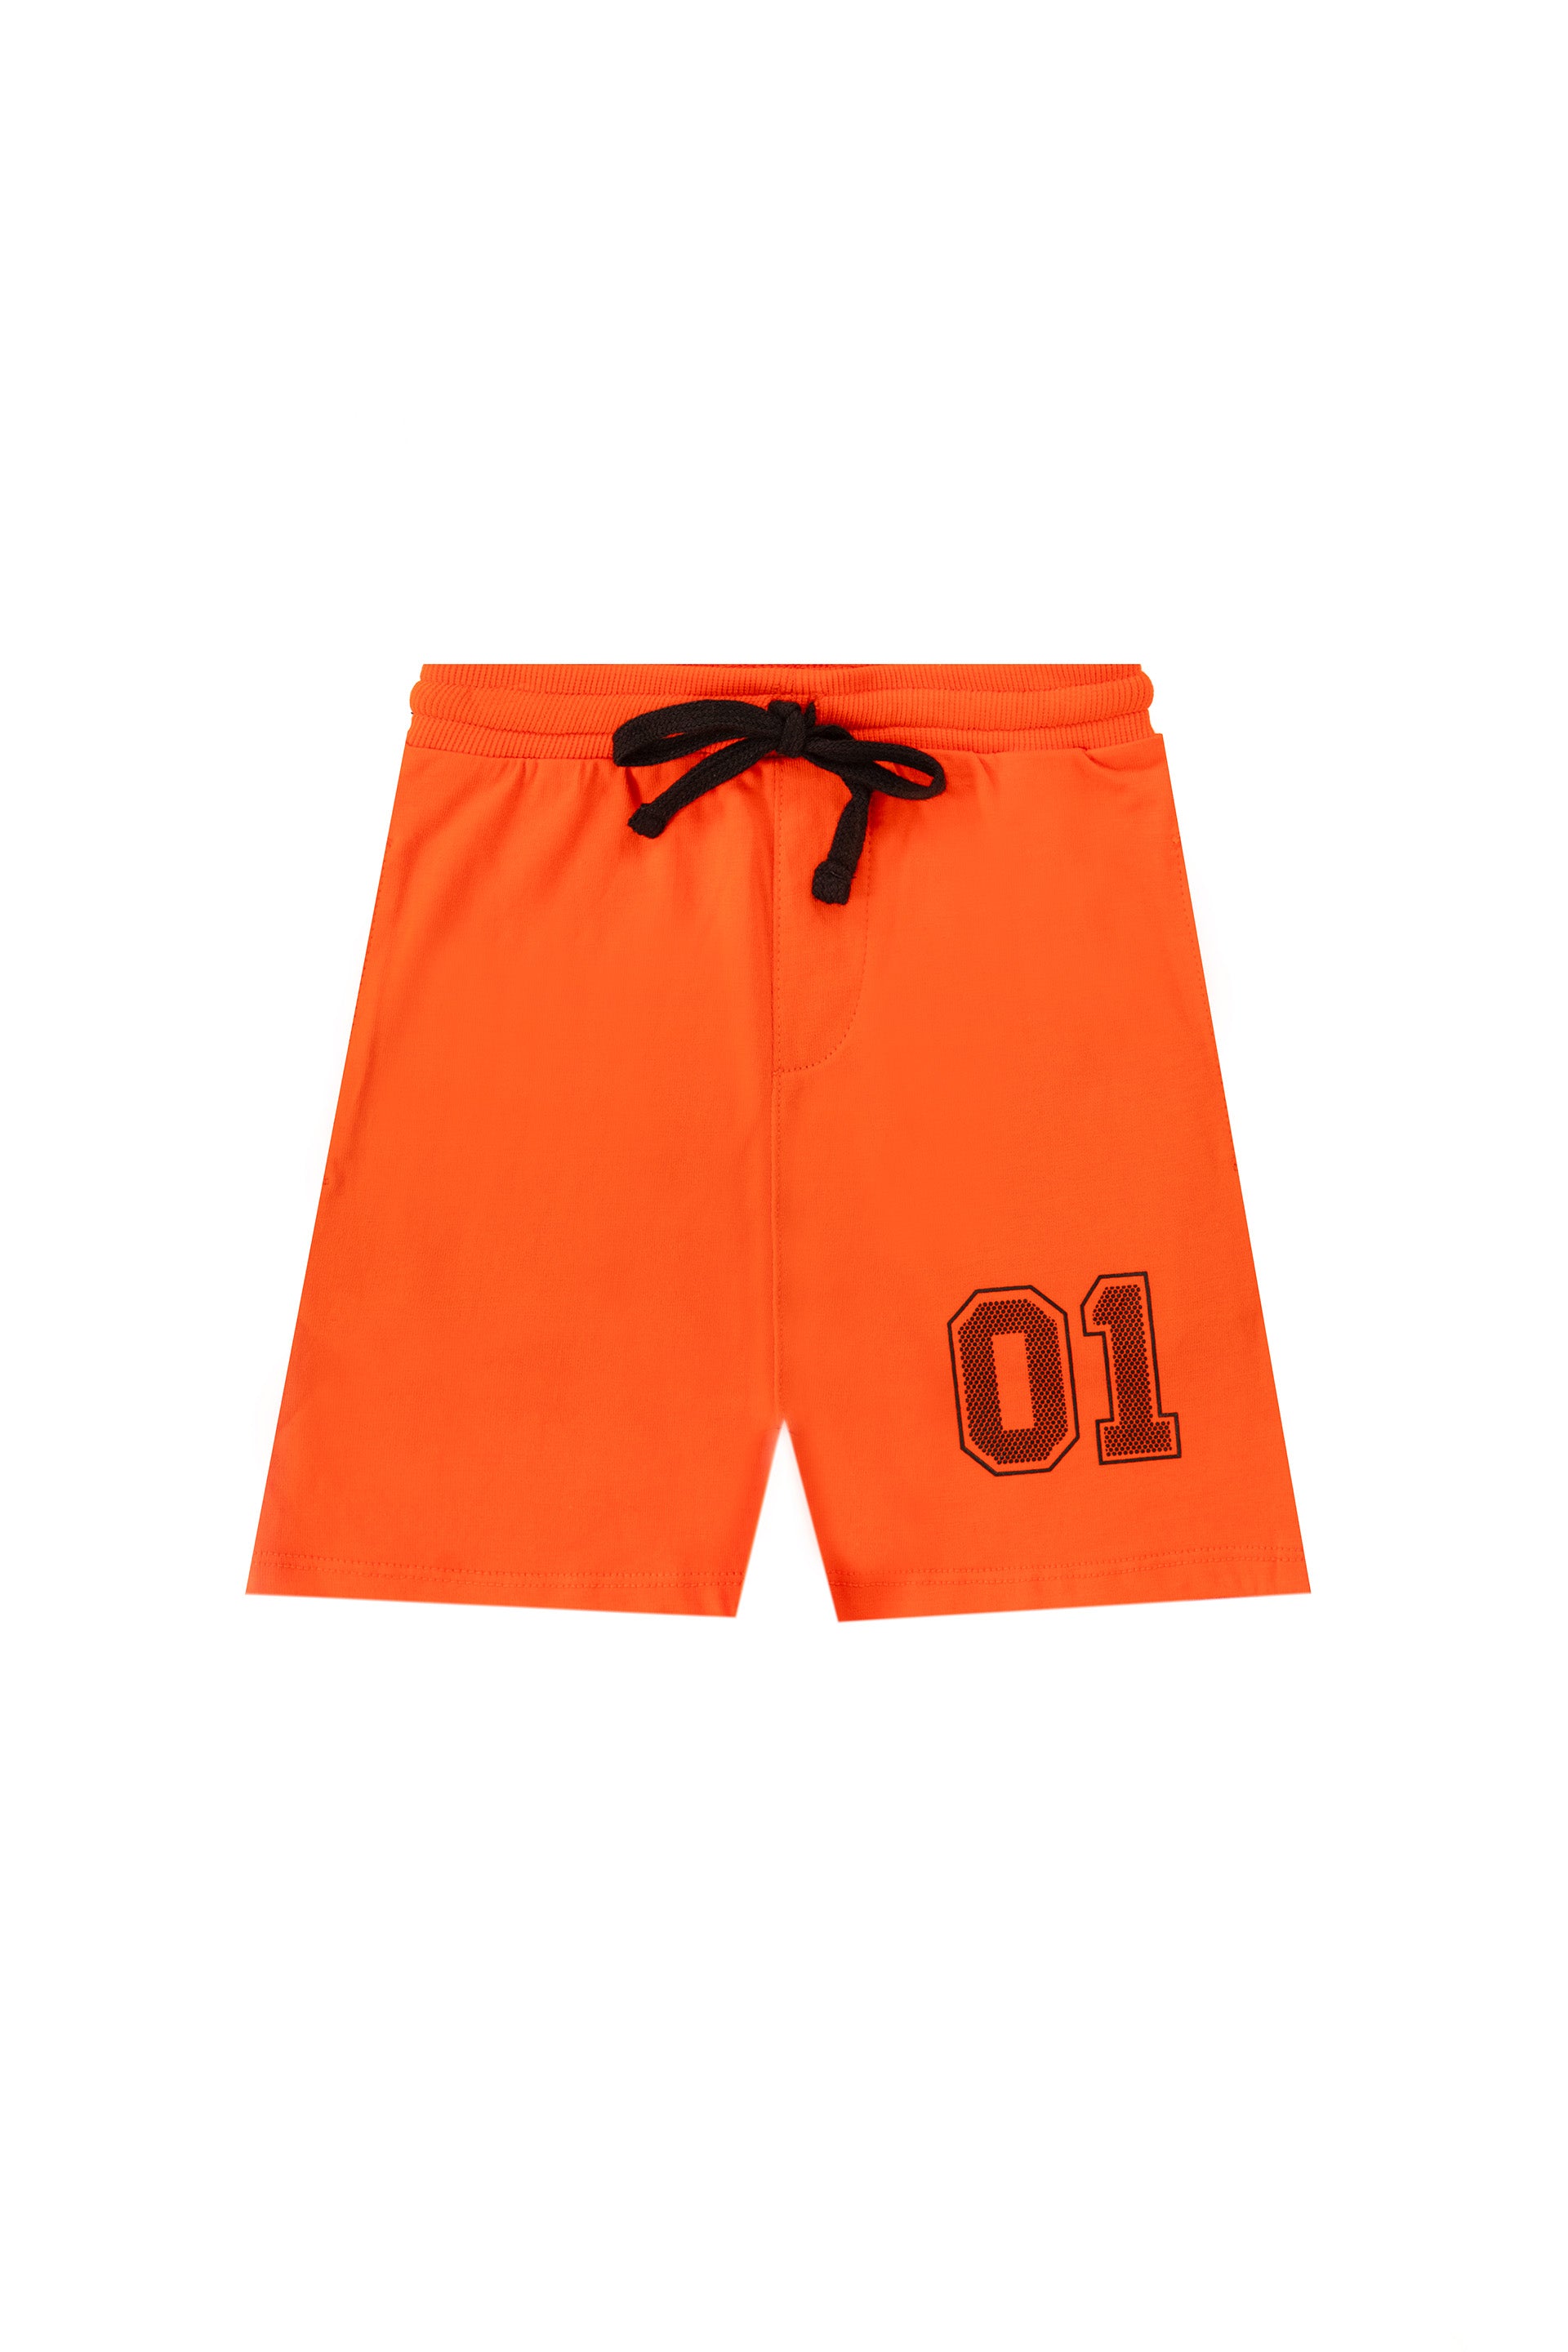 Graphic Shorts Orange